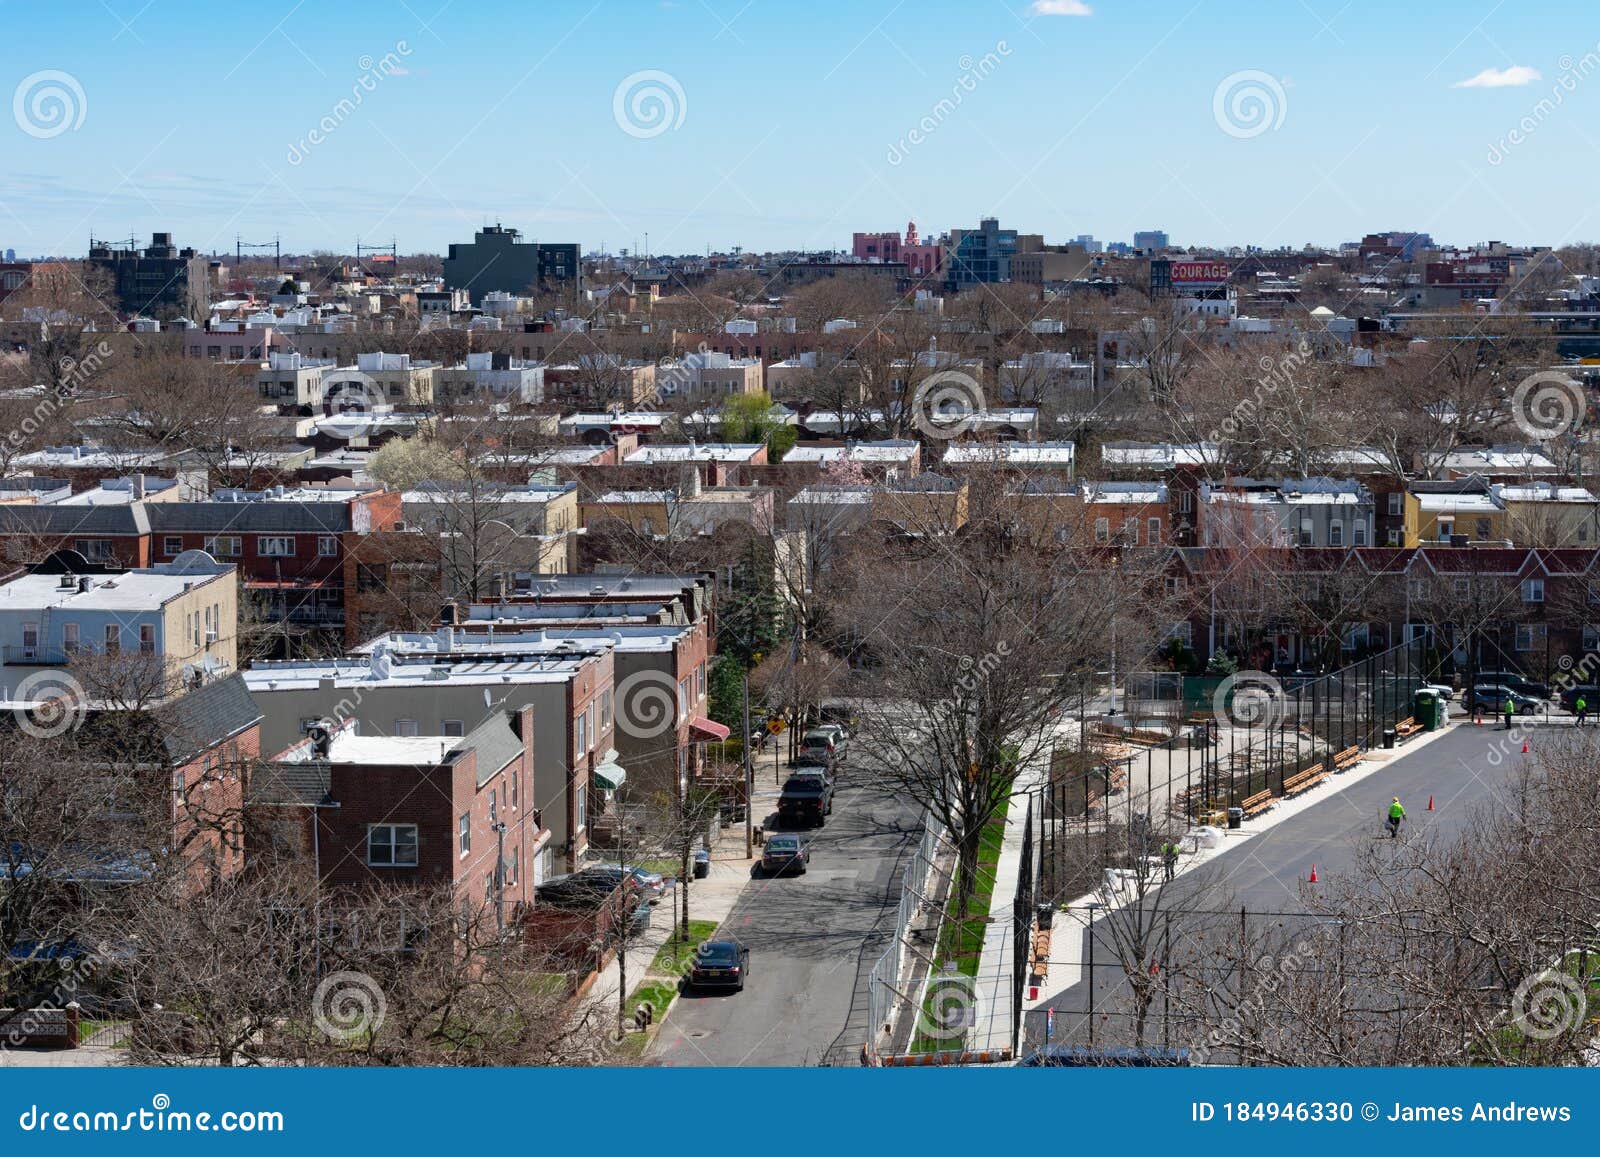 Neighborhood Skyline Of Astoria Queens New York With Homes Editorial